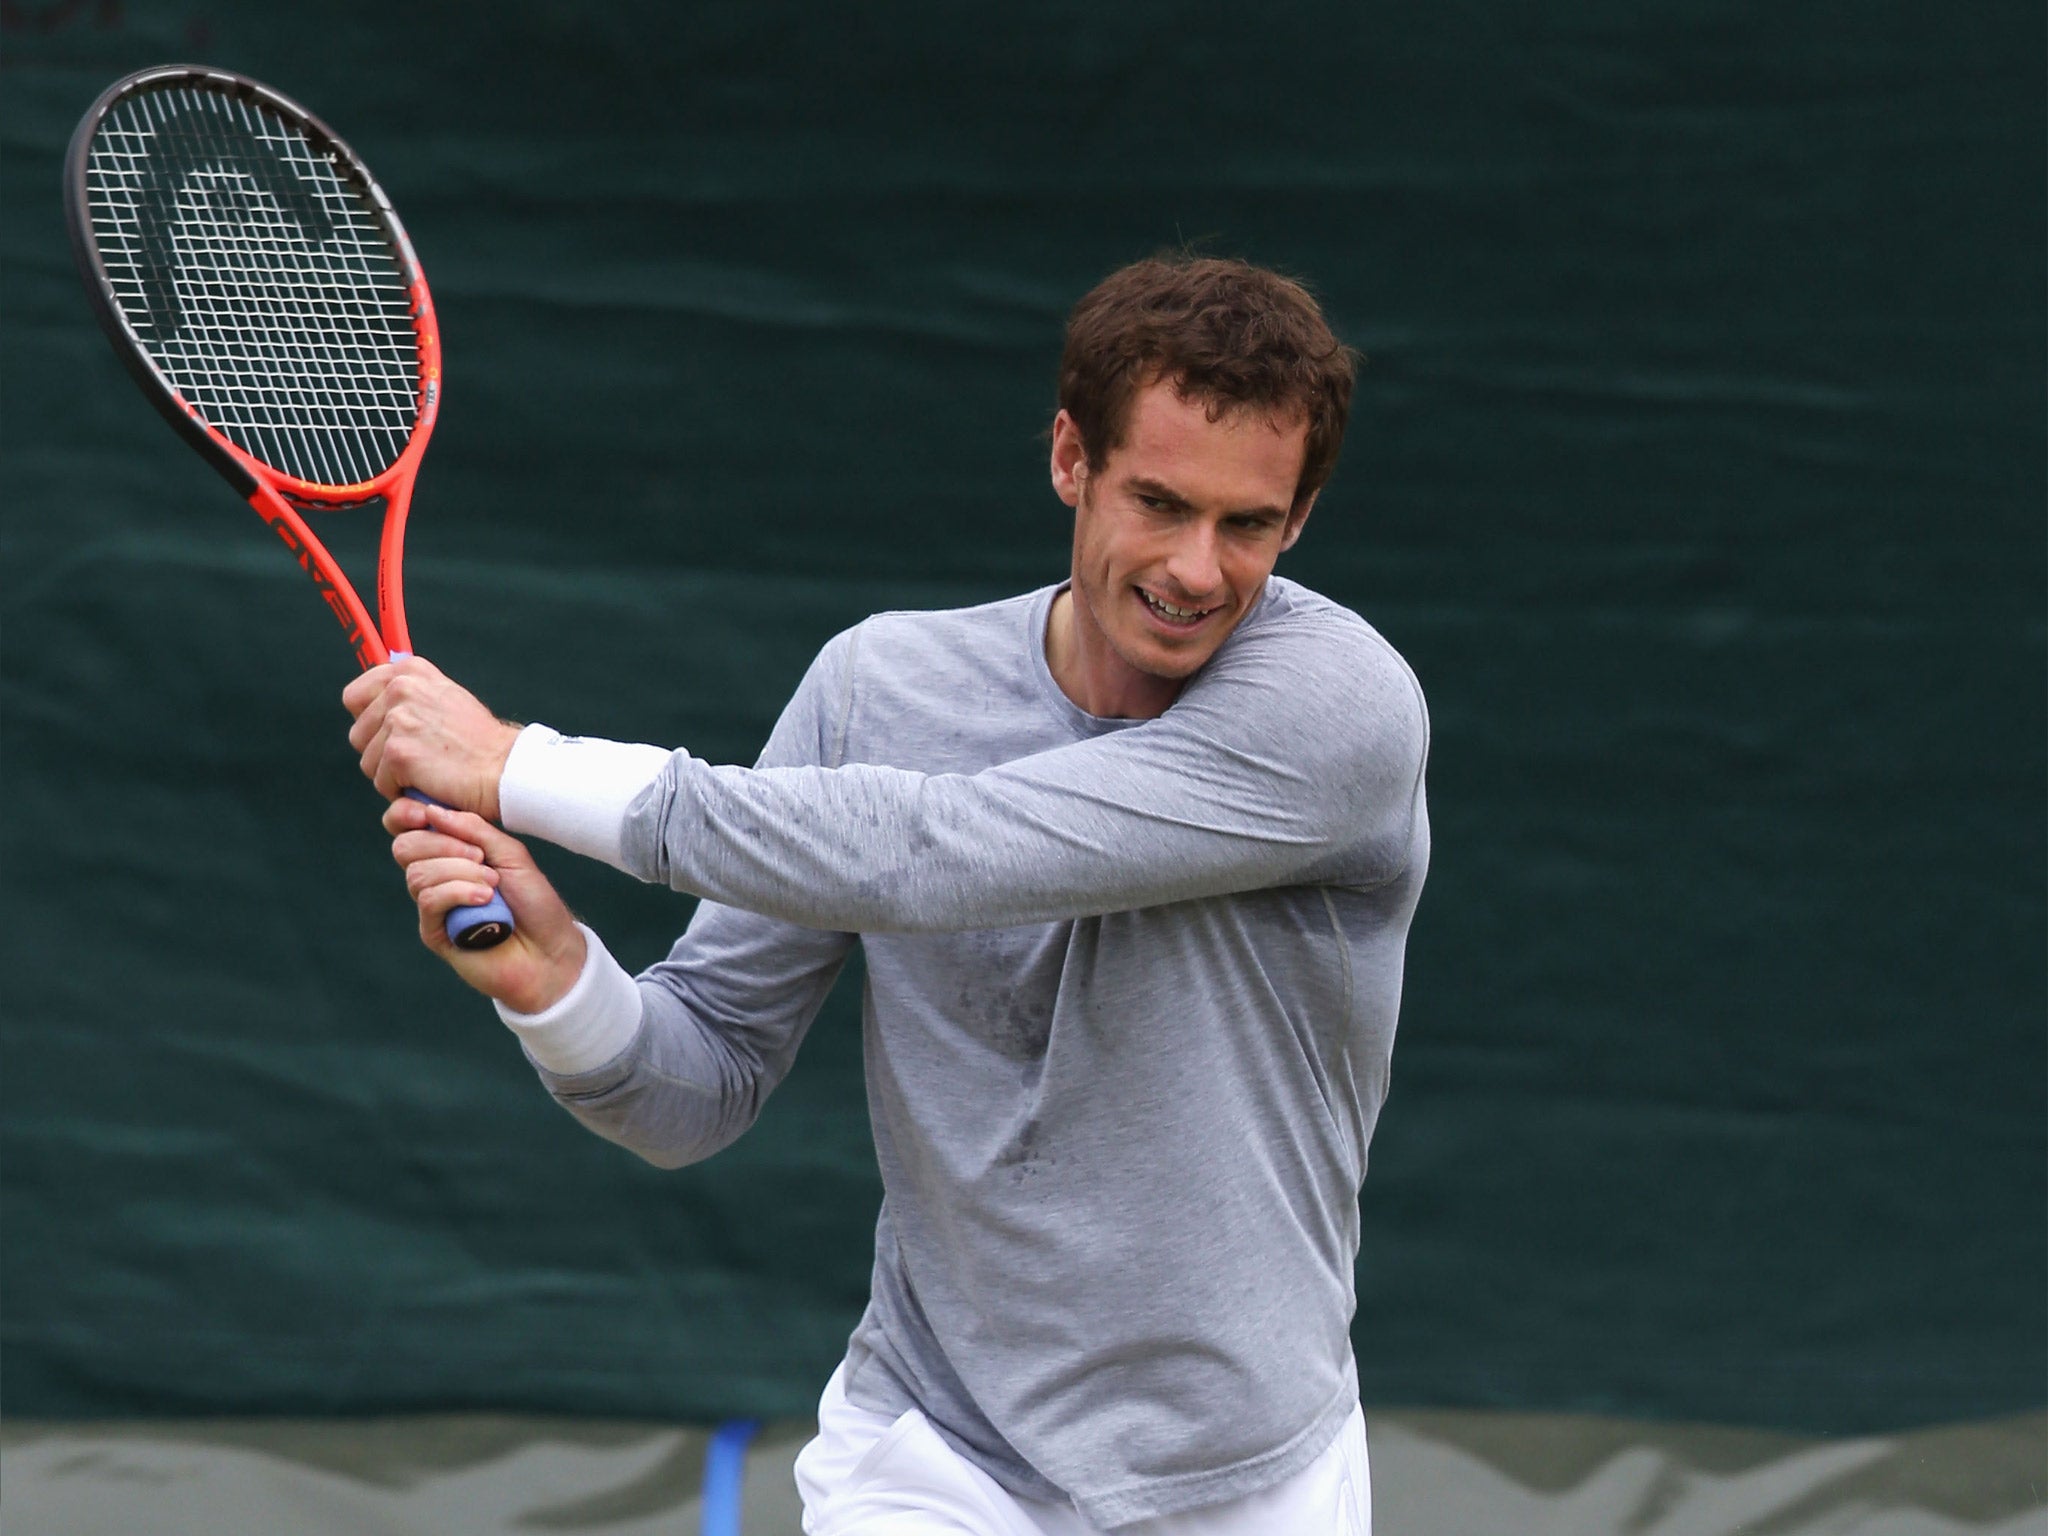 Mini-break: Andy Murray has not played since his Wimbledon triumph